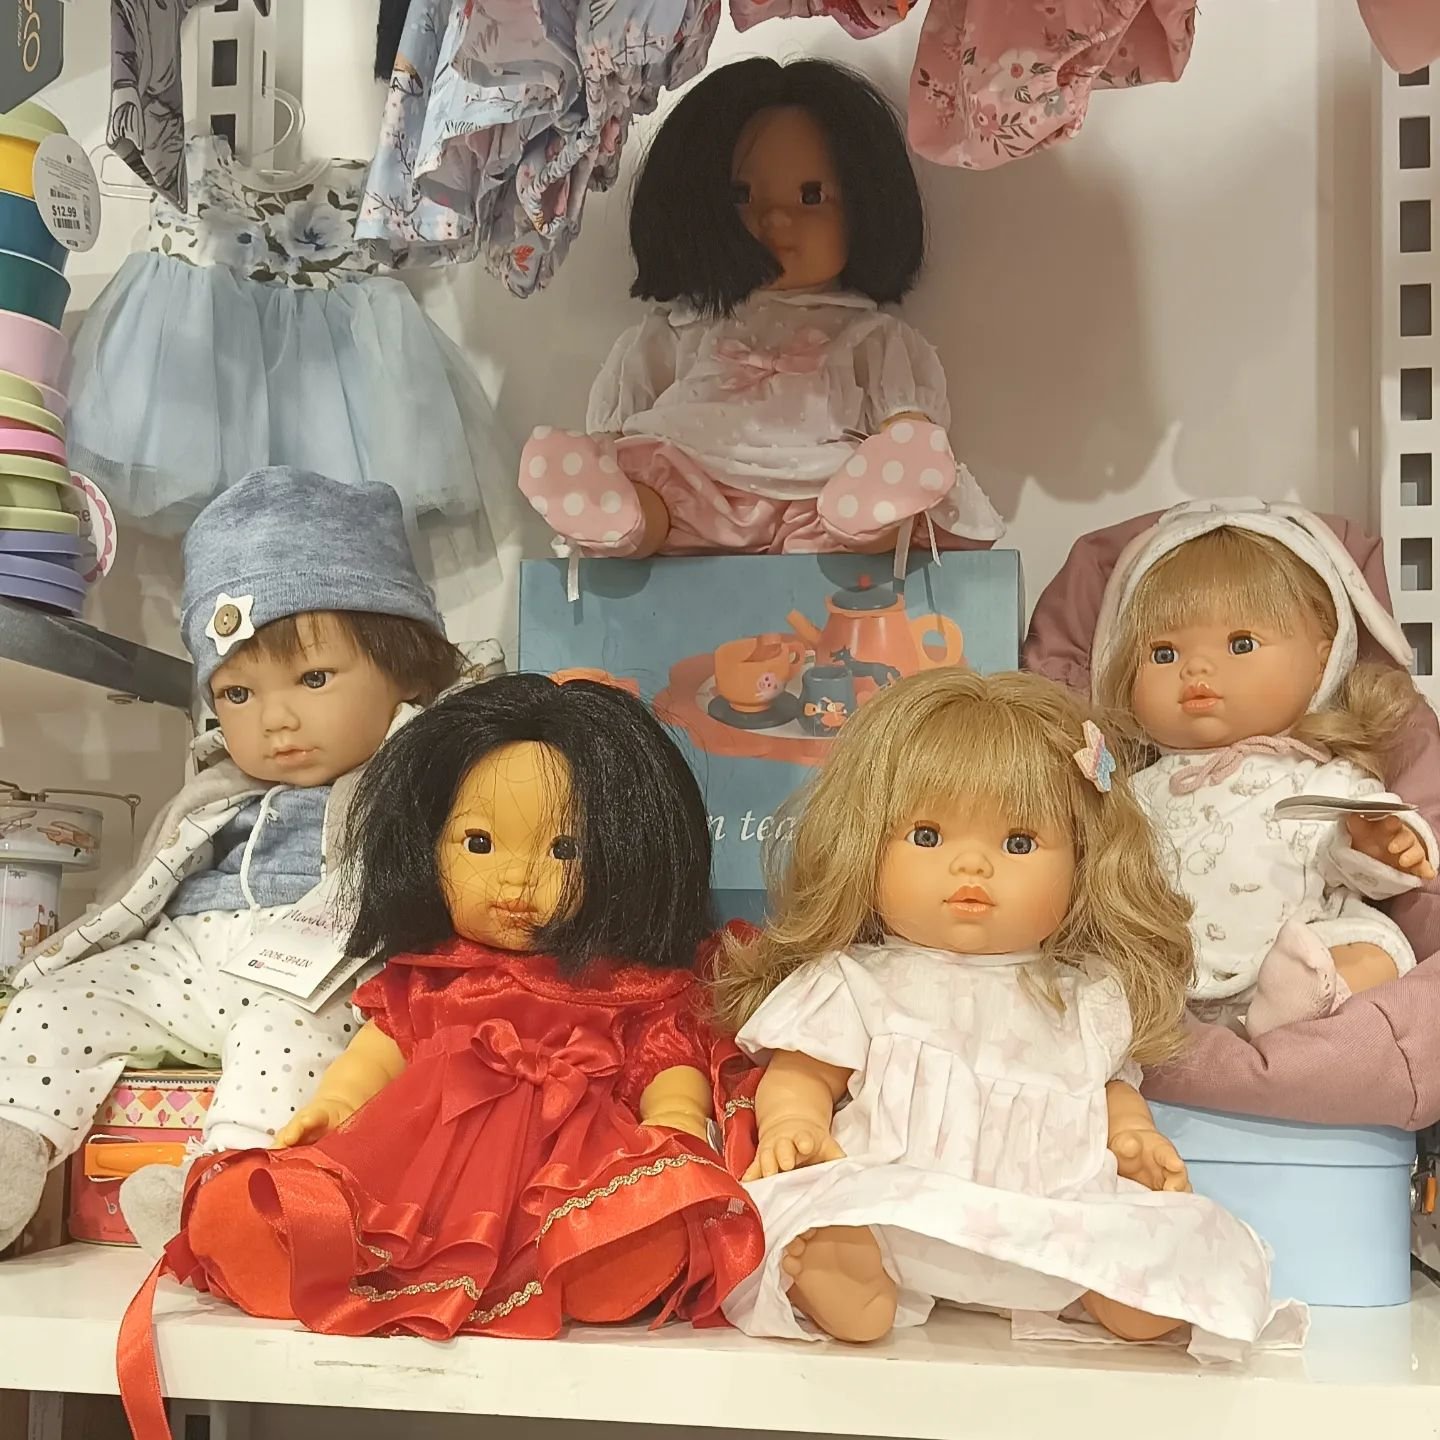 25% Off All Spanish Dolls
https://junokids.com.au/dolls

#dolls #spanishdoll #kidstoys #doll #dollcollection